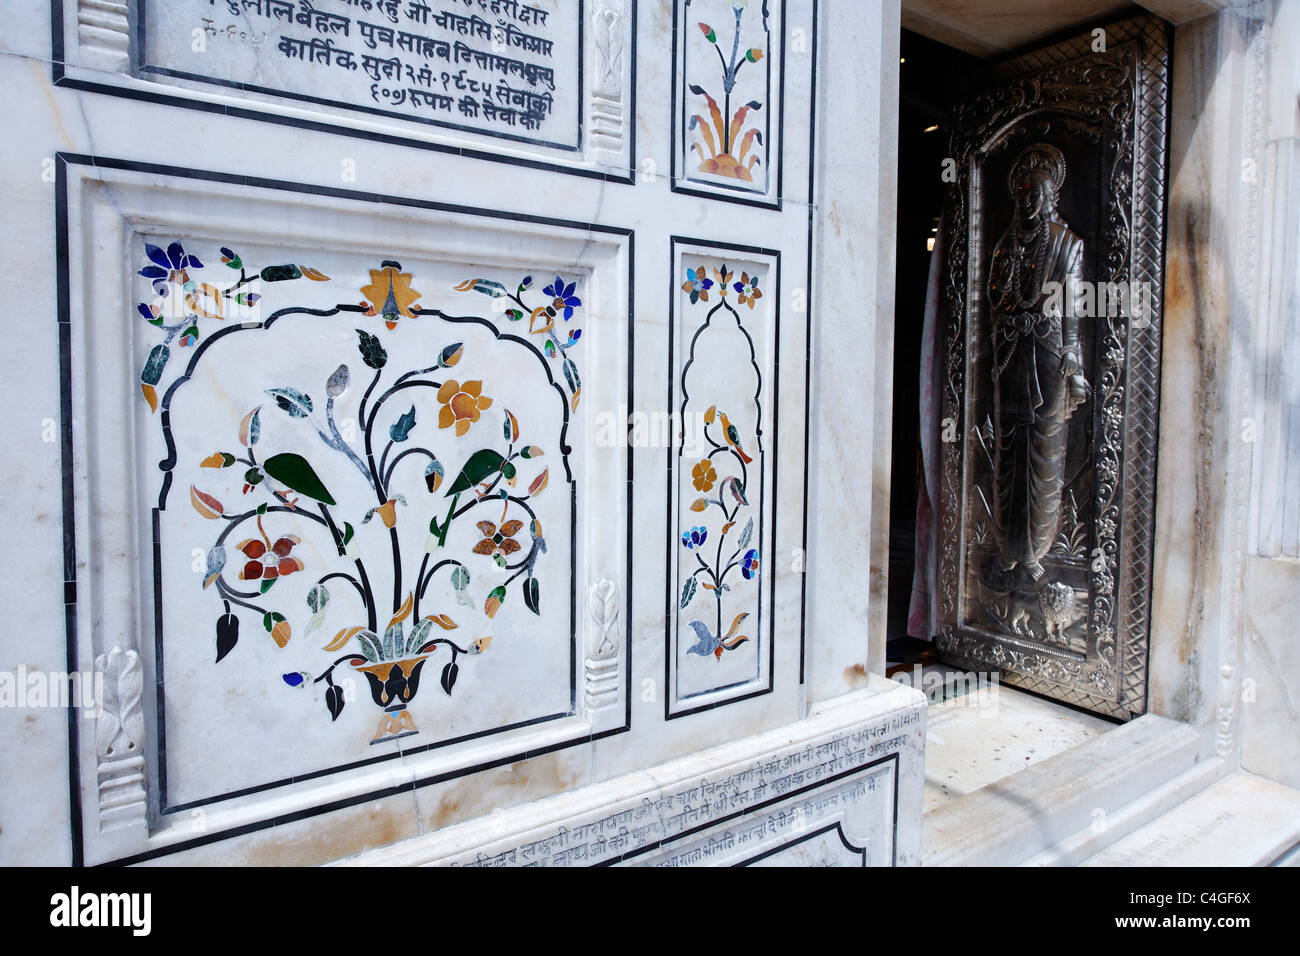 India - Punjab - Amritsar - Sri Durgiana temple - ornate marble inlay and silver doors Stock Photo